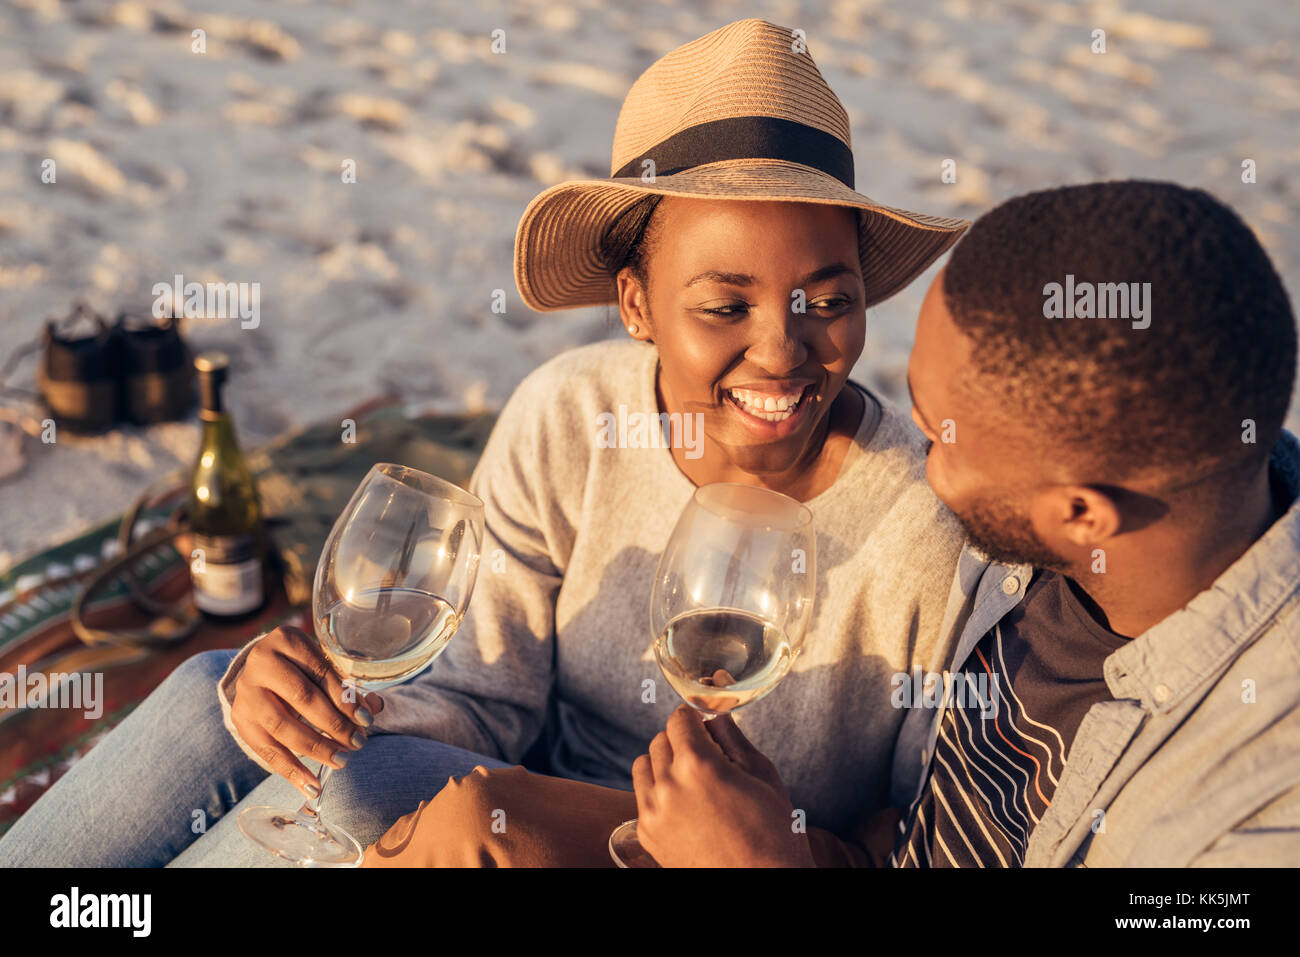 Felice giovane africano giovane bevendo vino insieme in spiaggia Foto Stock